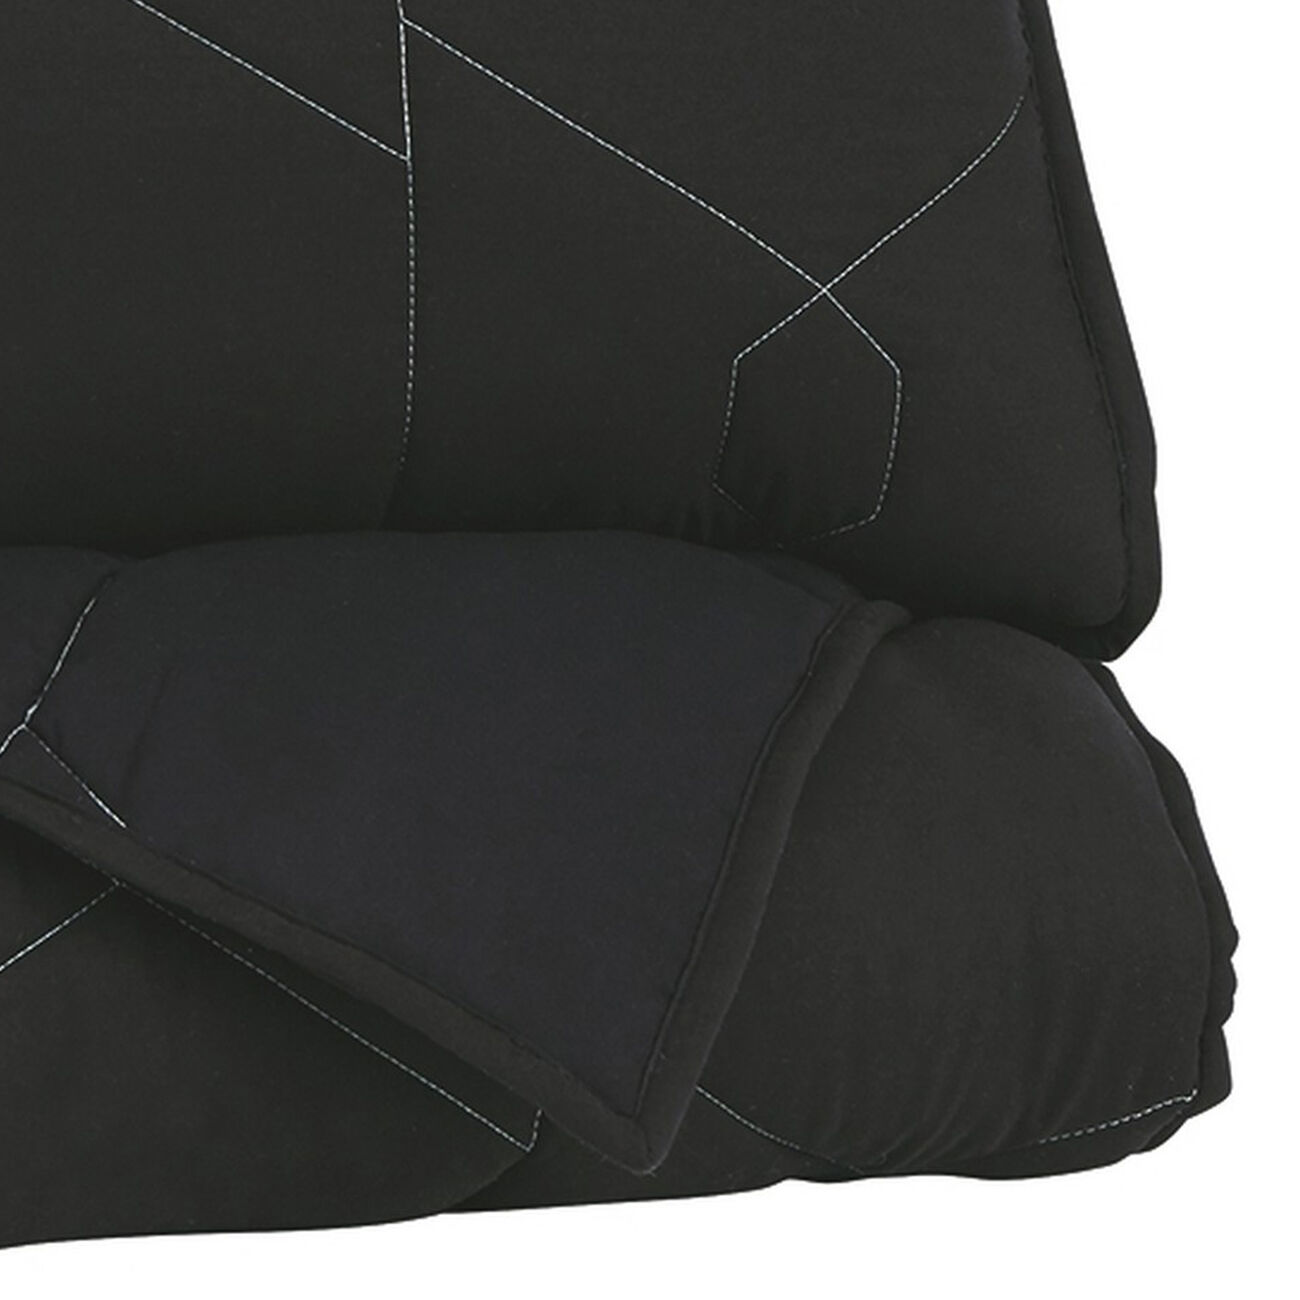 Geometrically stitched Twin Size Fabric Comforter set with 1 Sham, Black